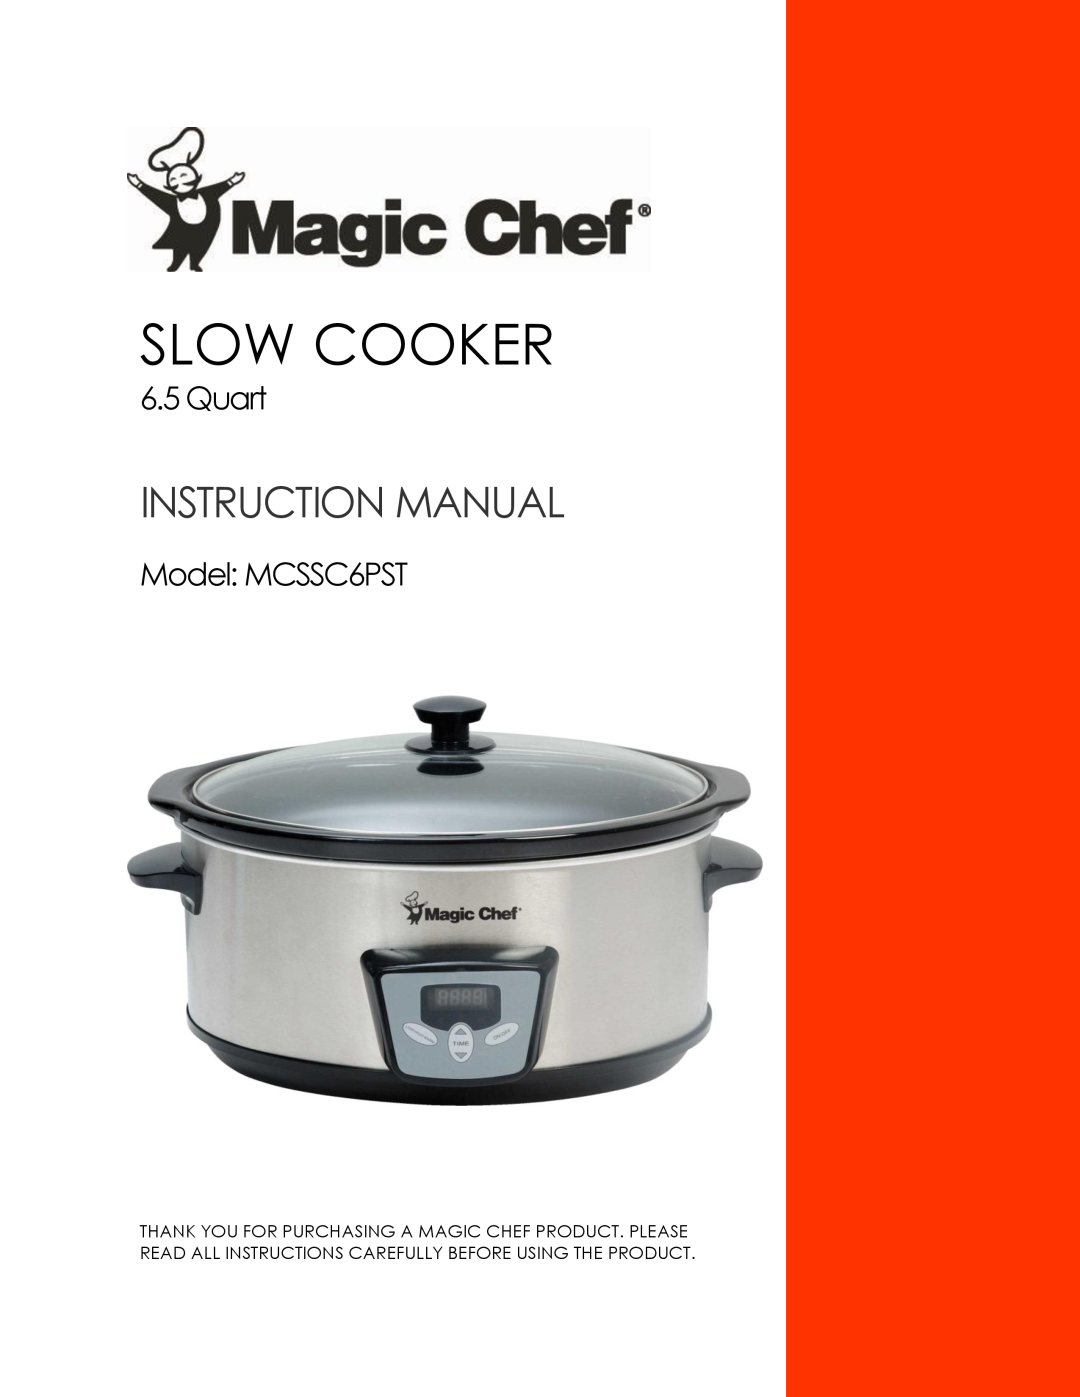 Magic Chef instruction manual Slow Cooker, Quart, Model MCSSC6PST 